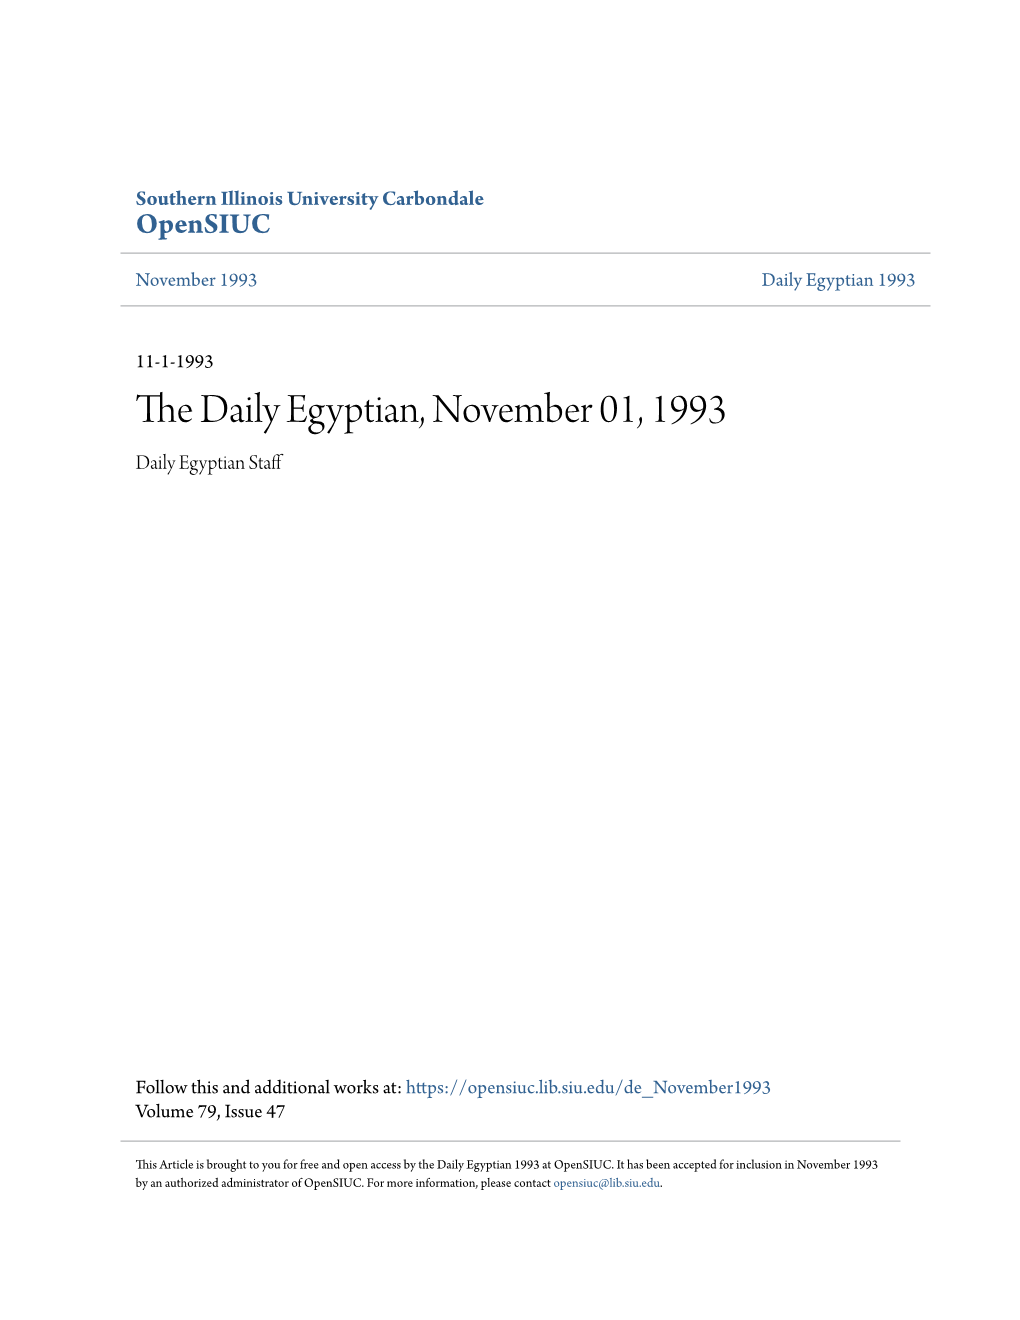 The Daily Egyptian, November 01, 1993